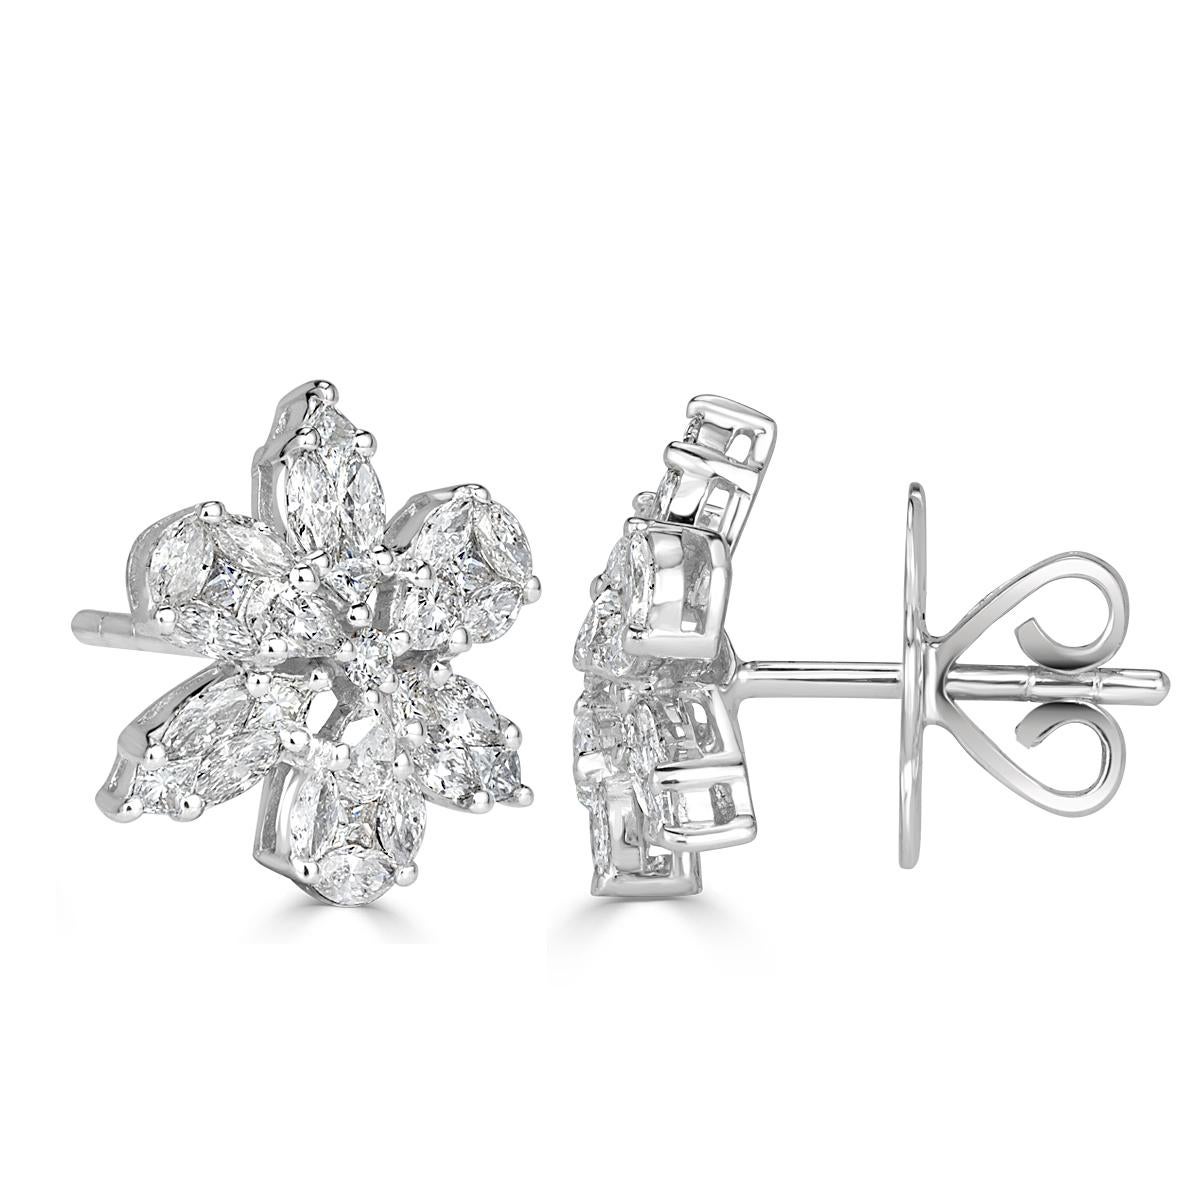 Women's or Men's Mark Broumand 1.85 Carat Floral Cluster Diamond Earrings